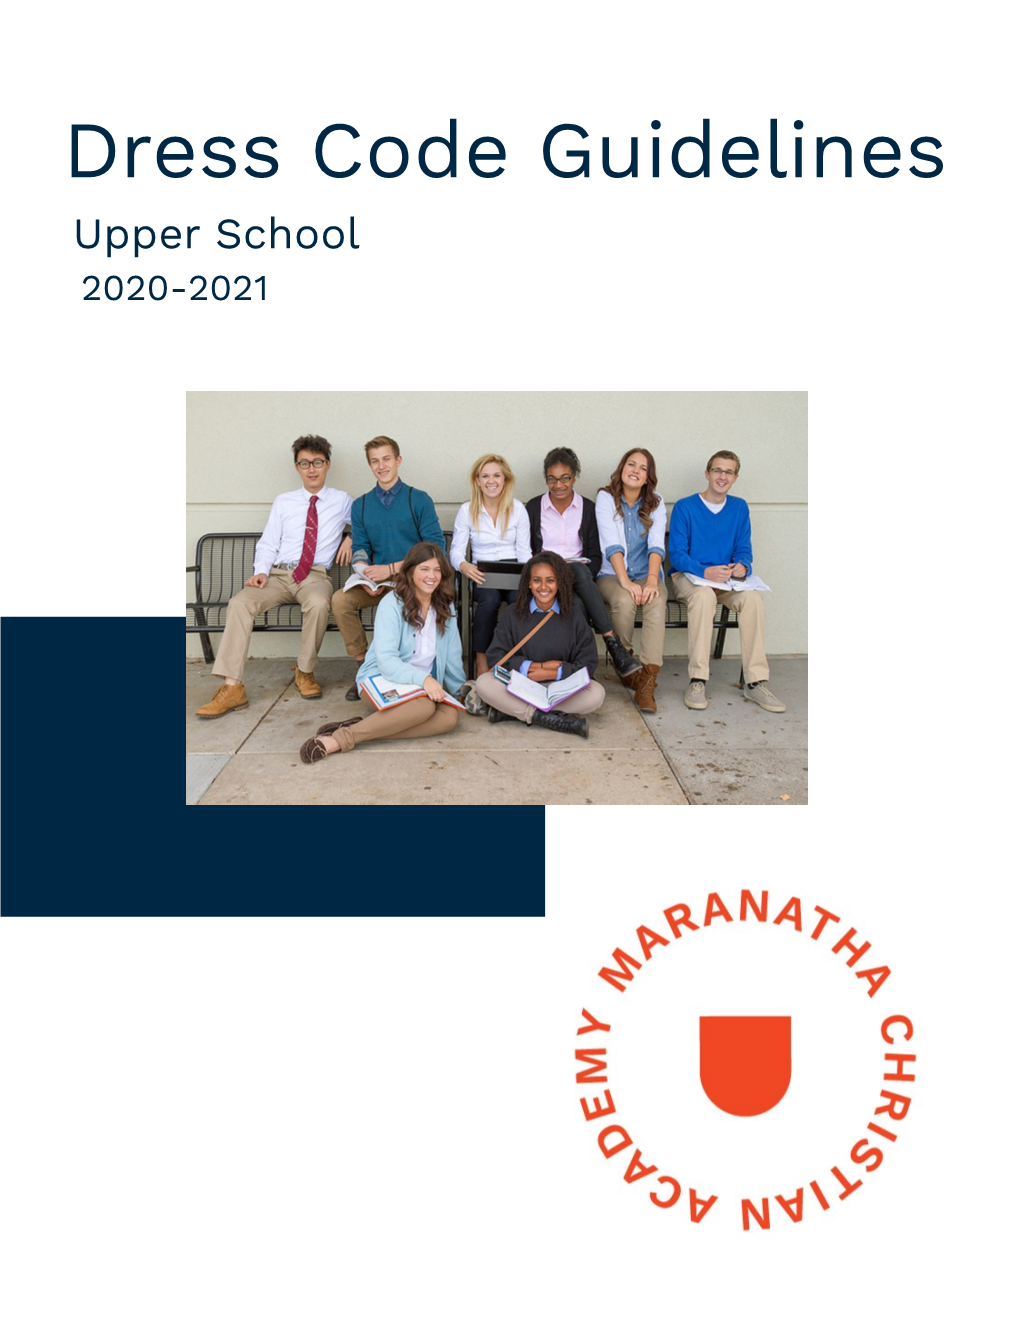 Dress Code Guidelines Upper School 2020-2021 General Appearance Guidelines